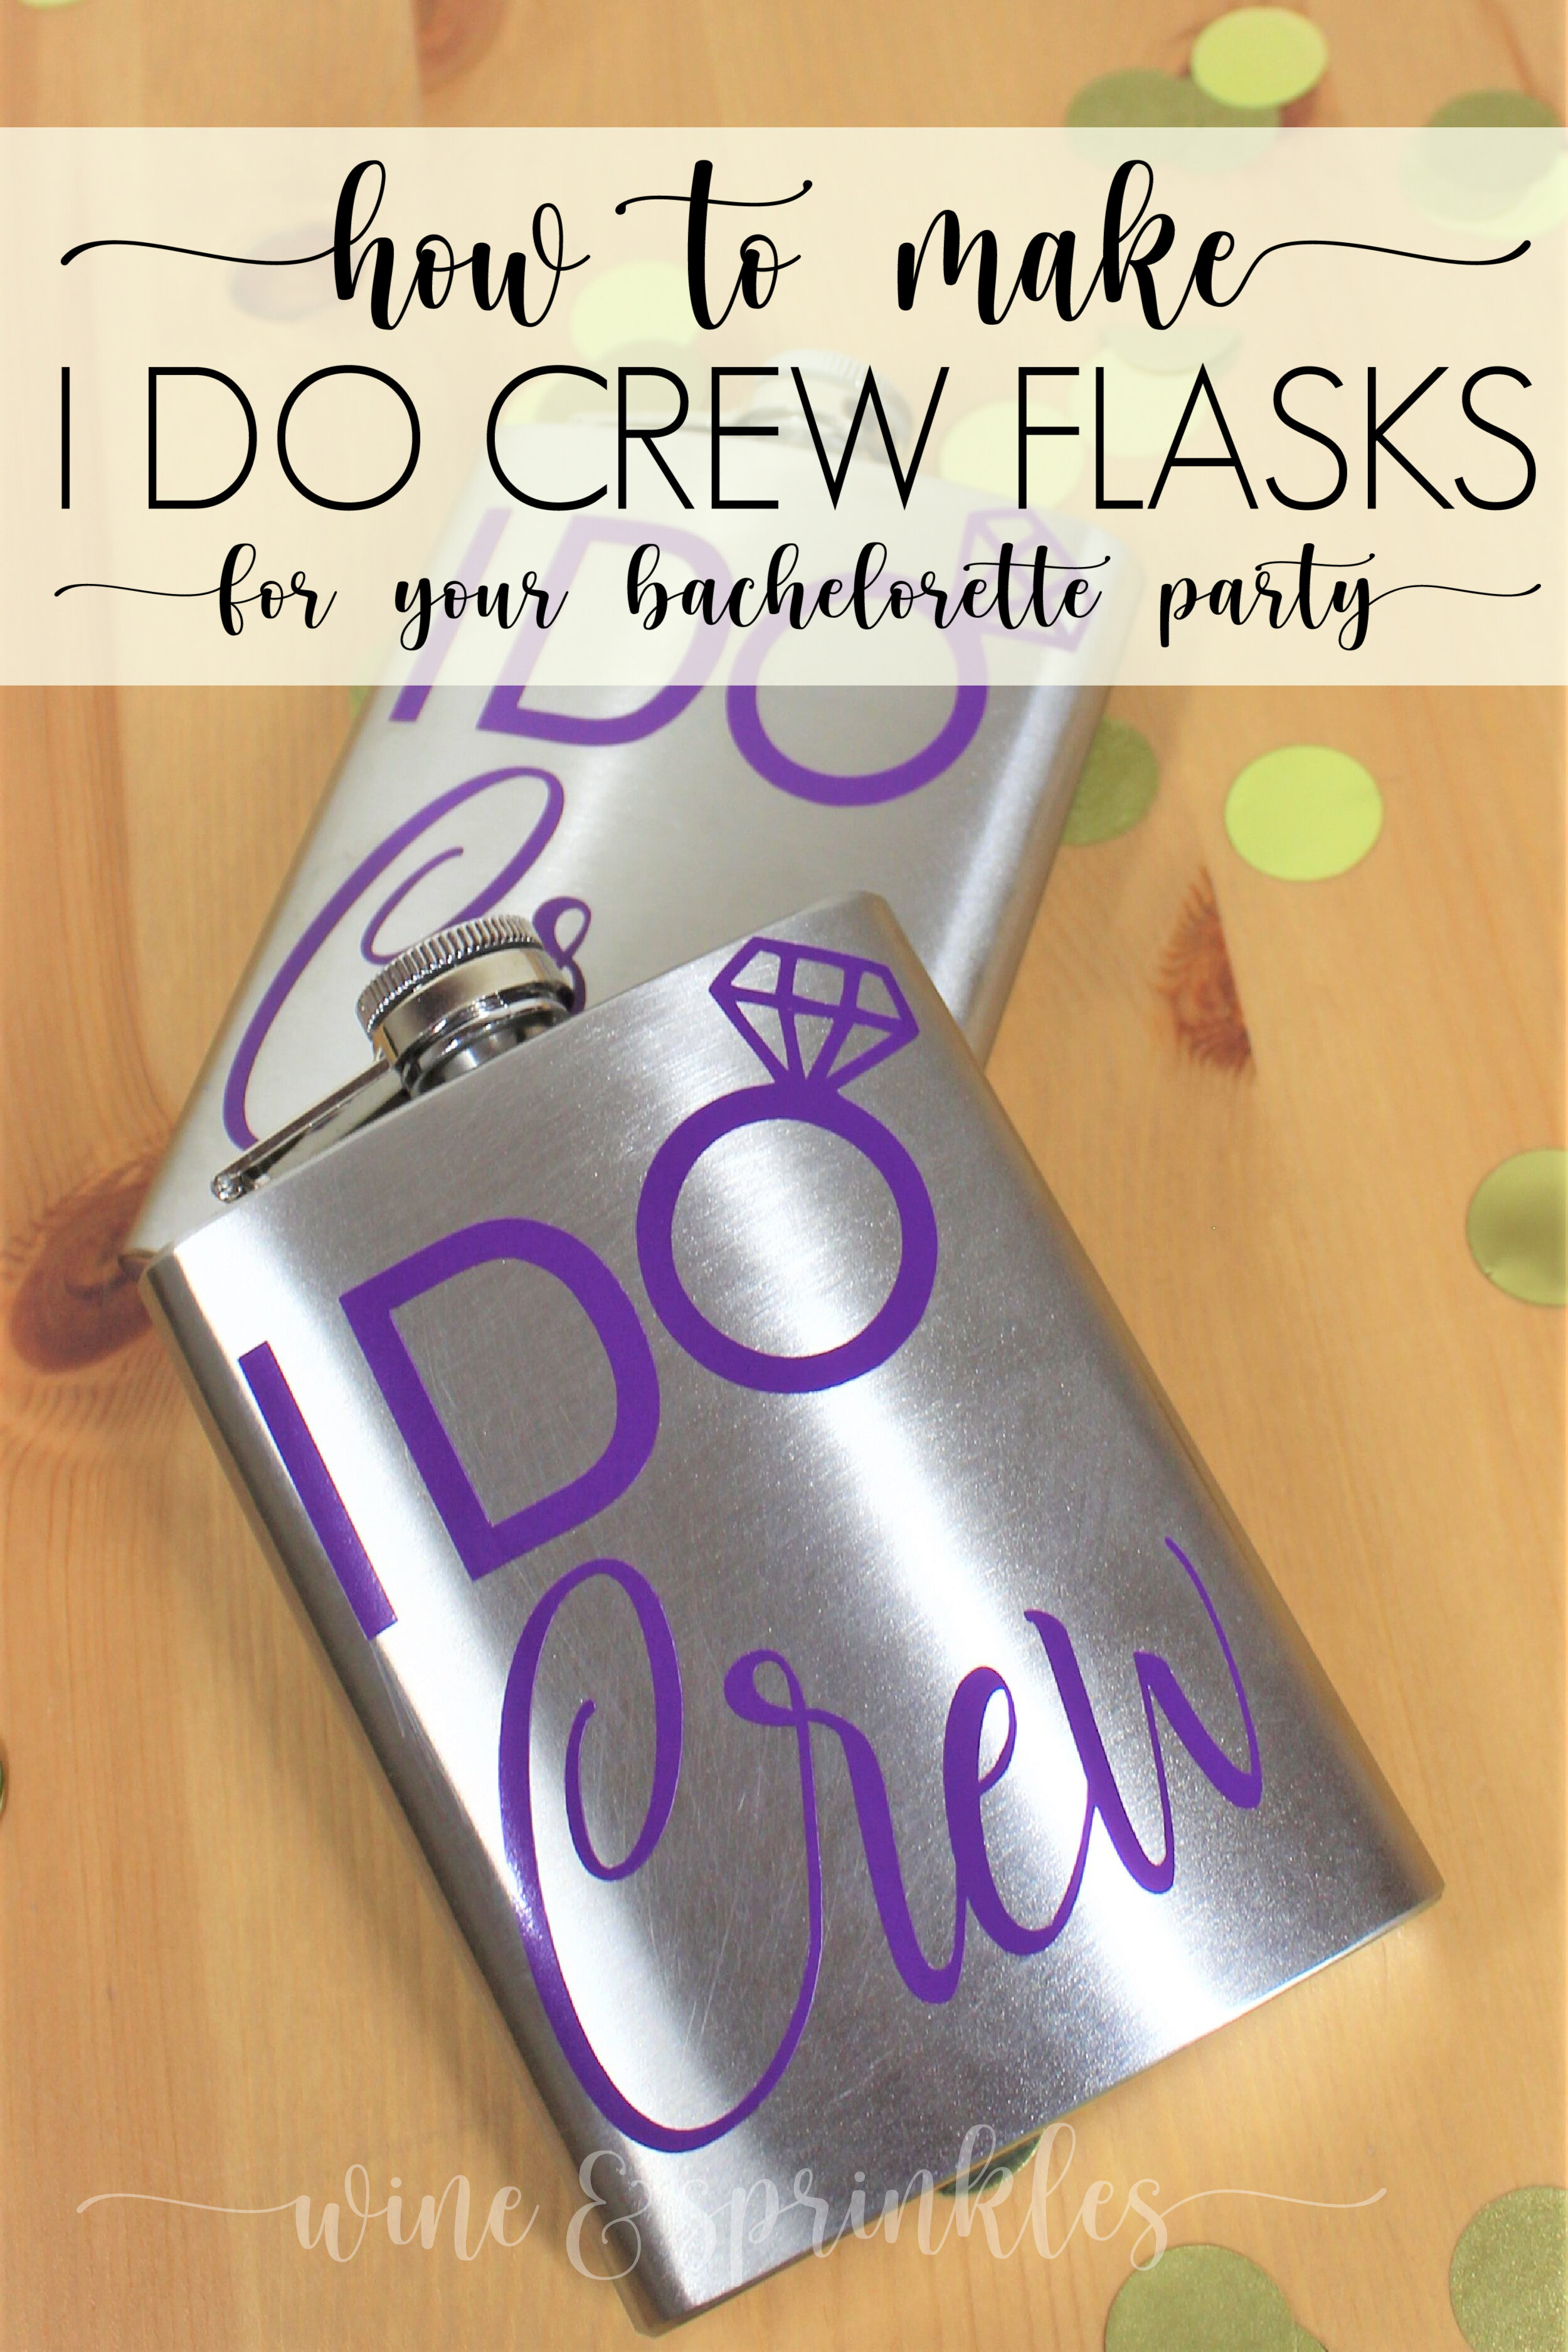 I Do Crew DIY Bachelorette Bridal Party Flasks